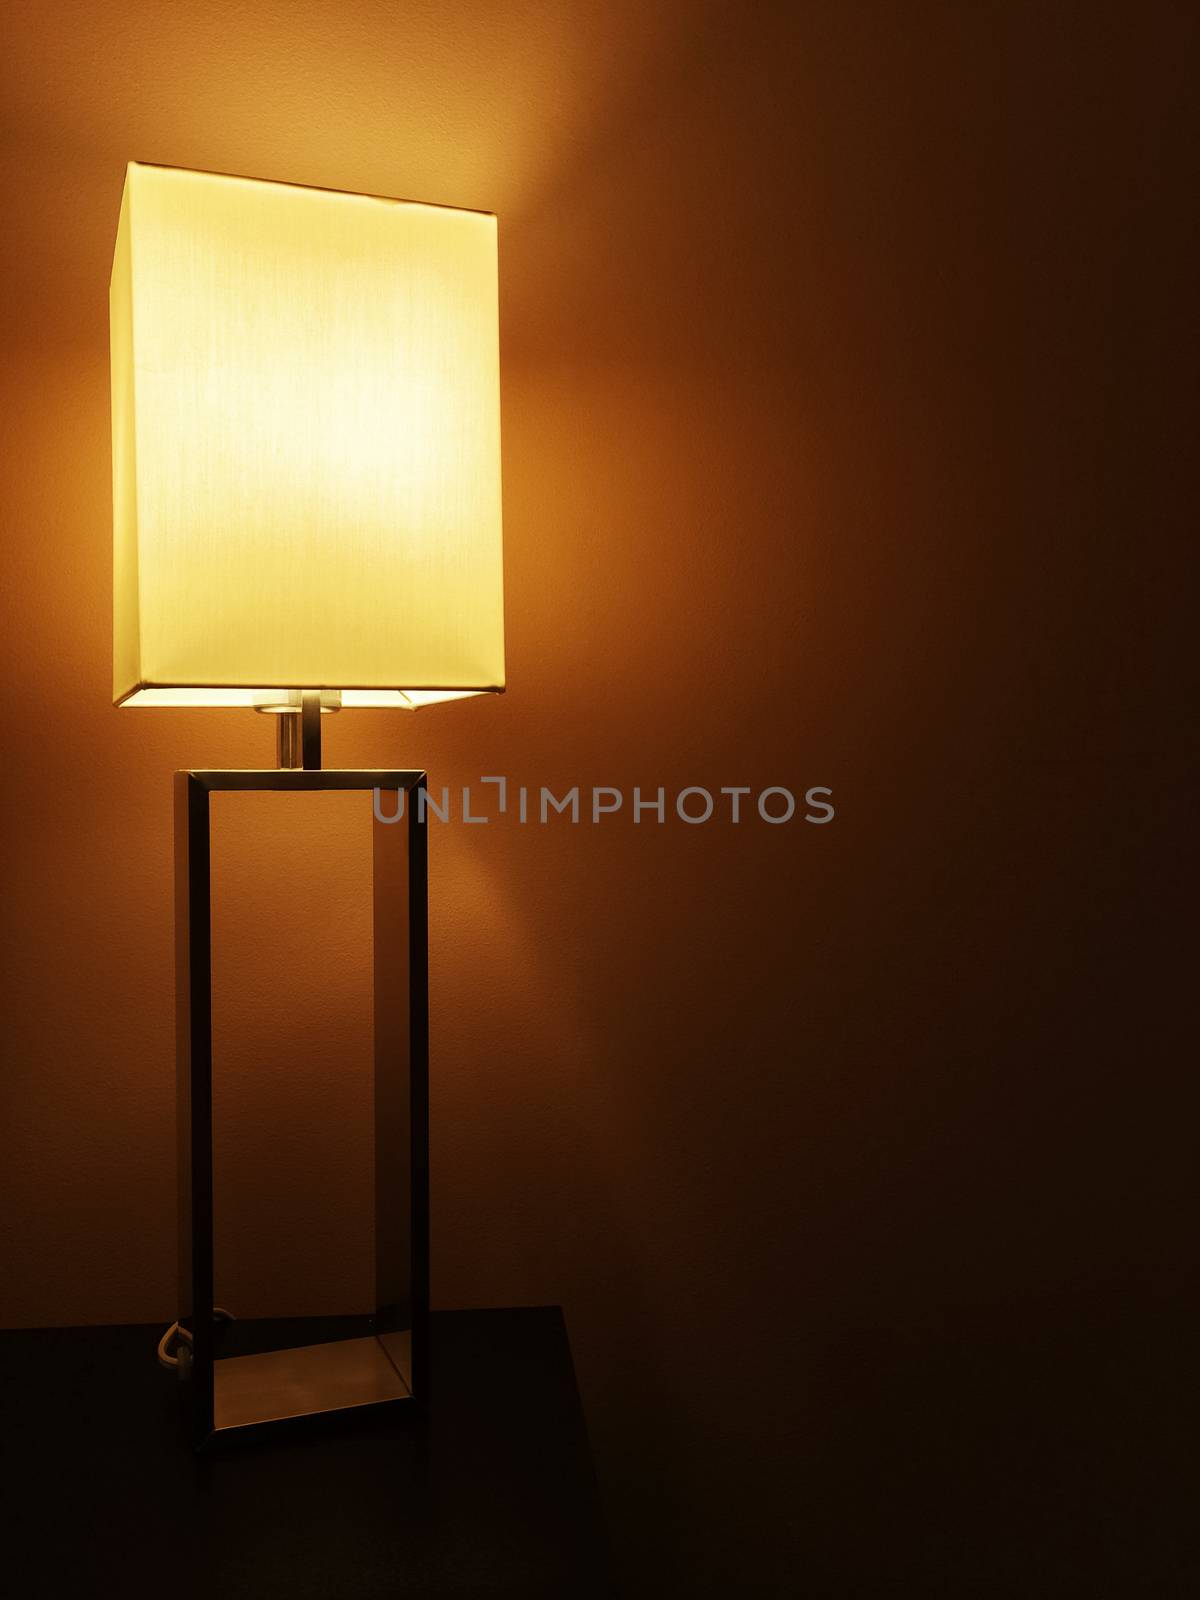 Illuminated modern table lamp in a dark room.